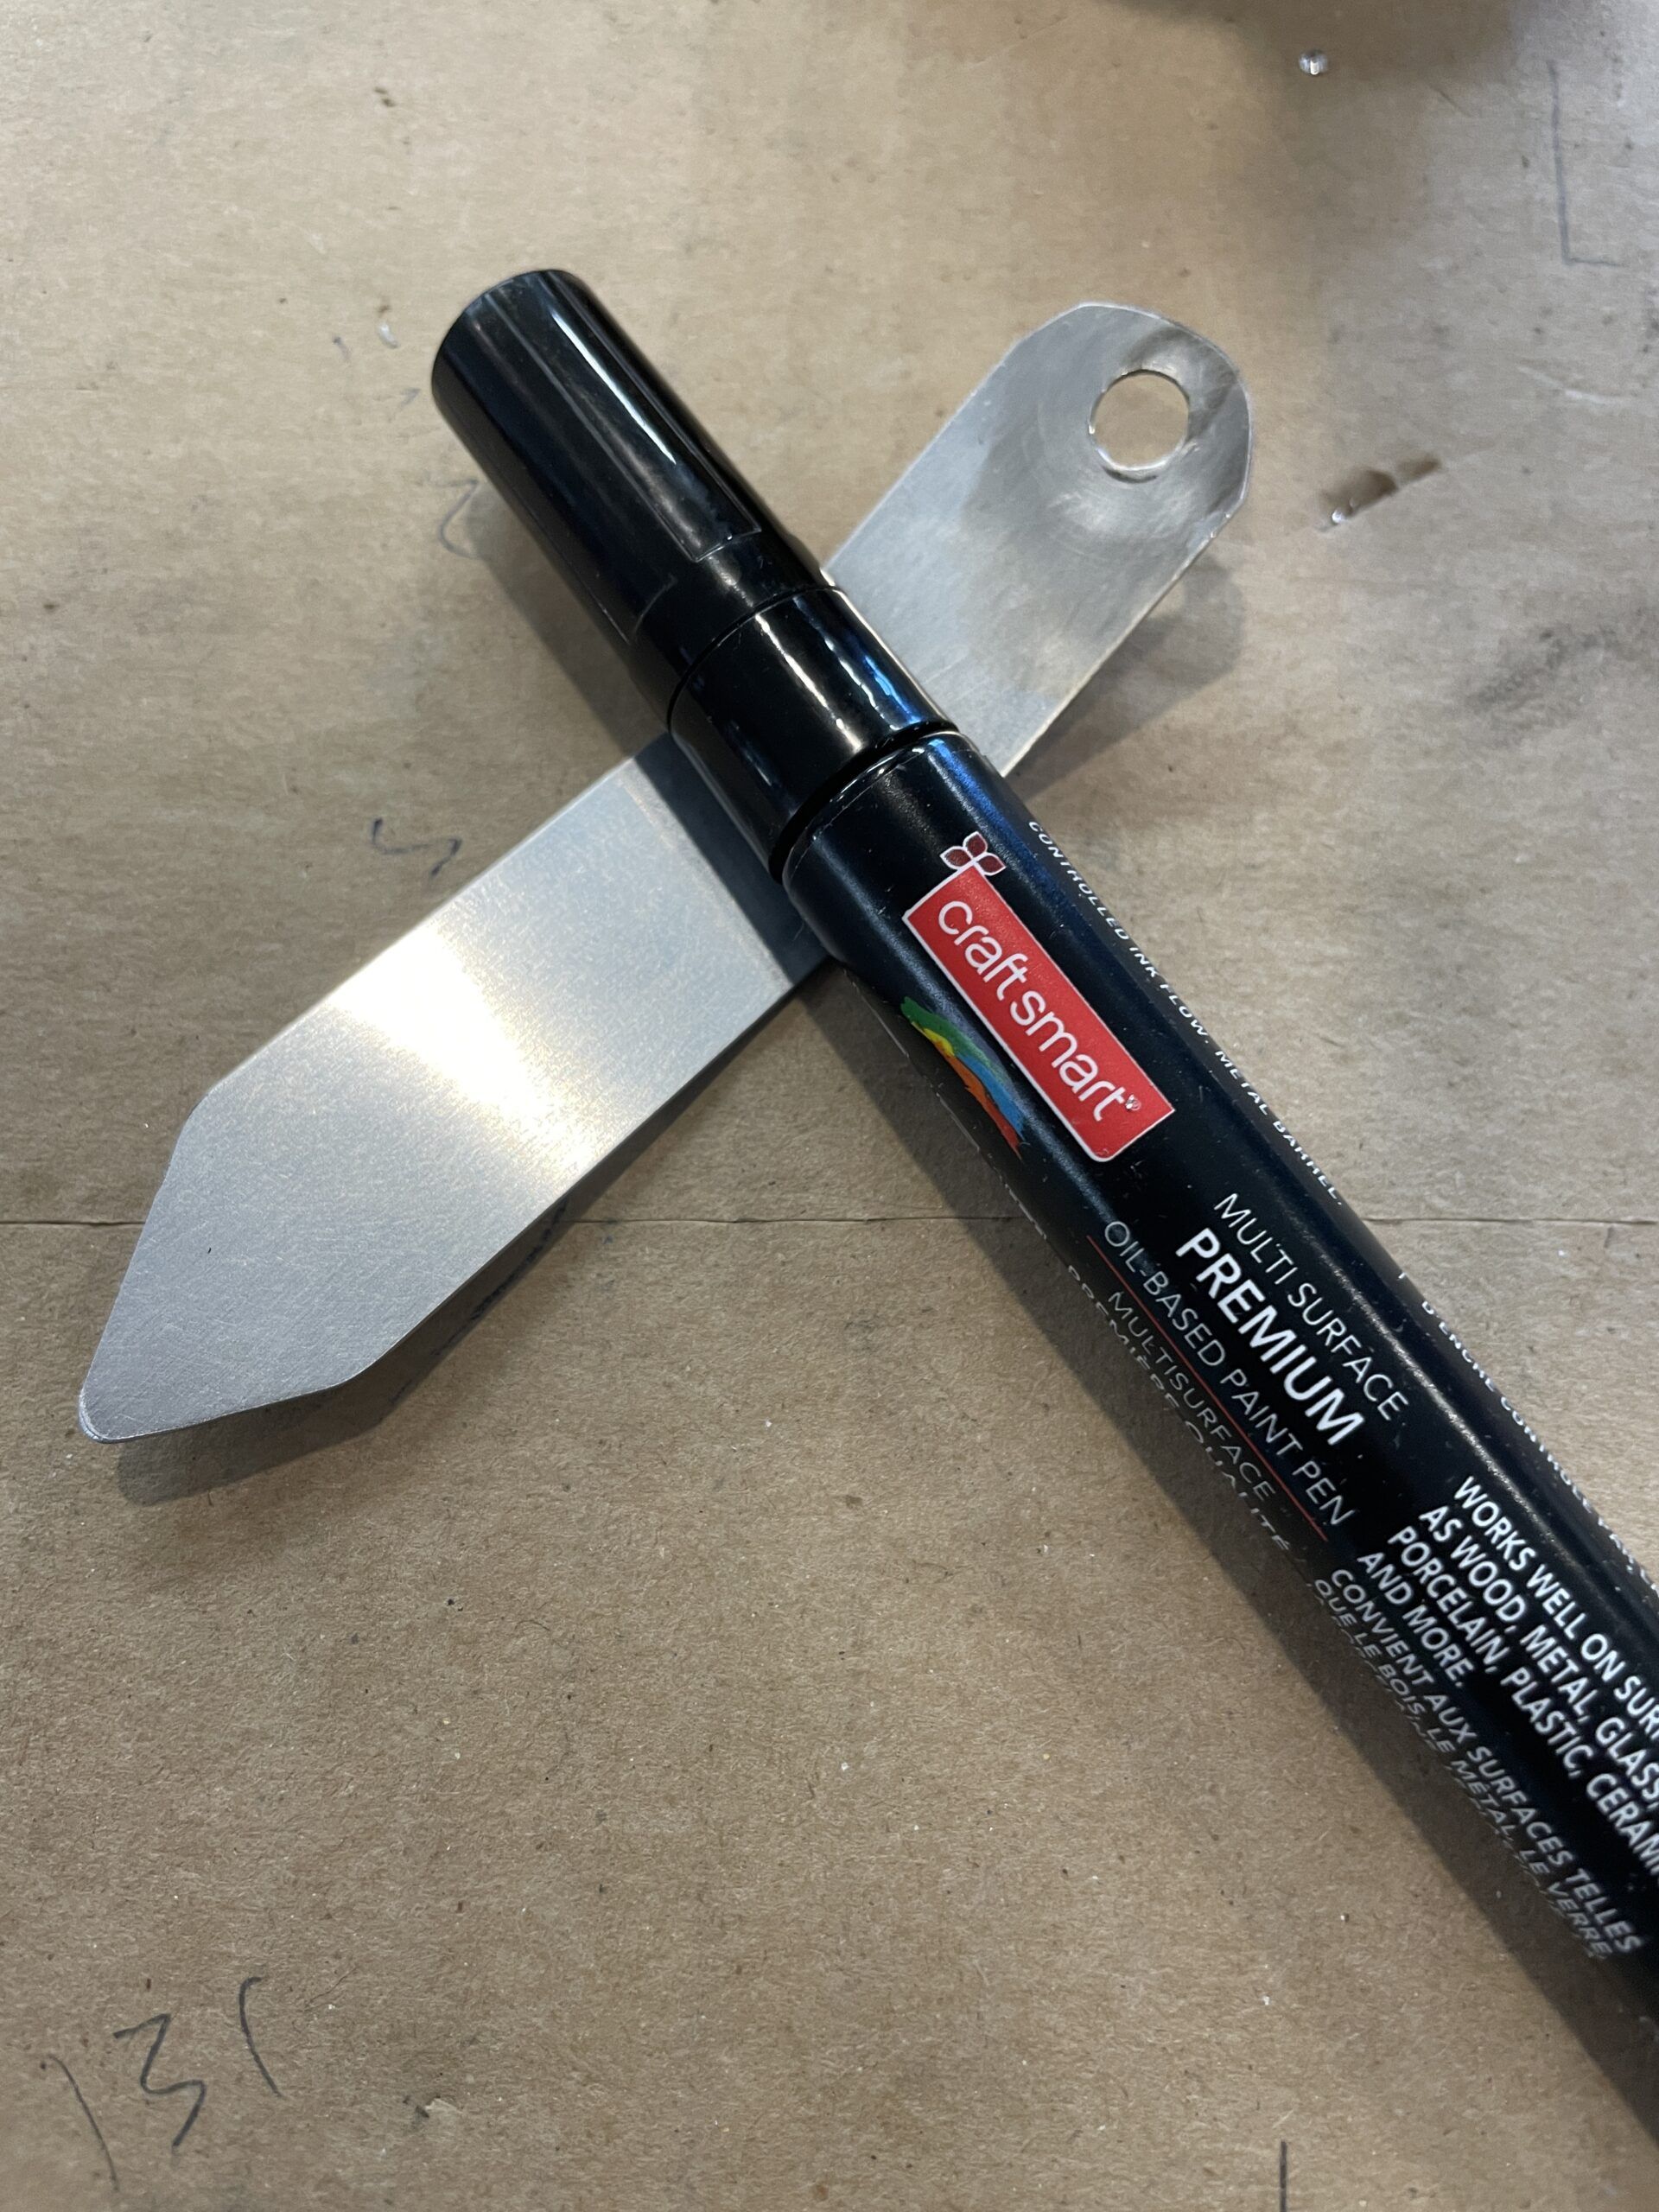 Craft Smart Premium Fine Tip Oil-Based Paint Pens